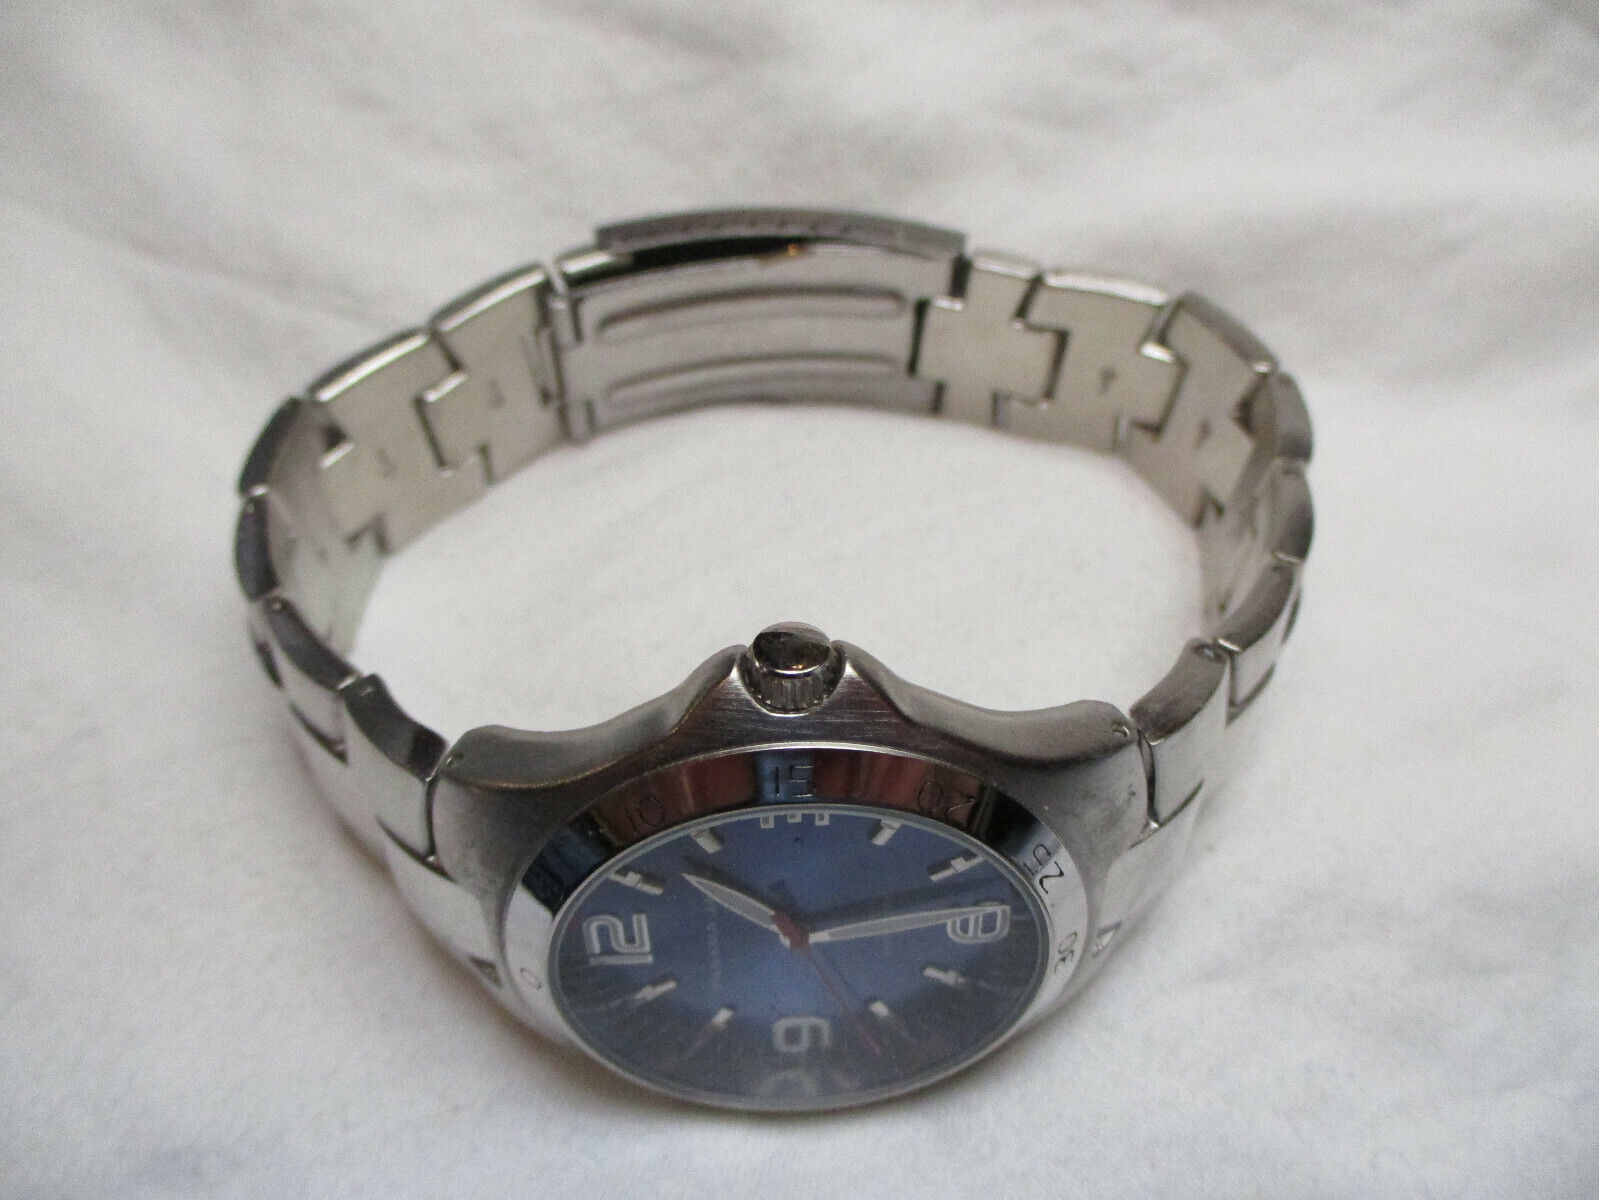 Panama Jack Men's Watch, Silvertone Metal Link Bracelet Band